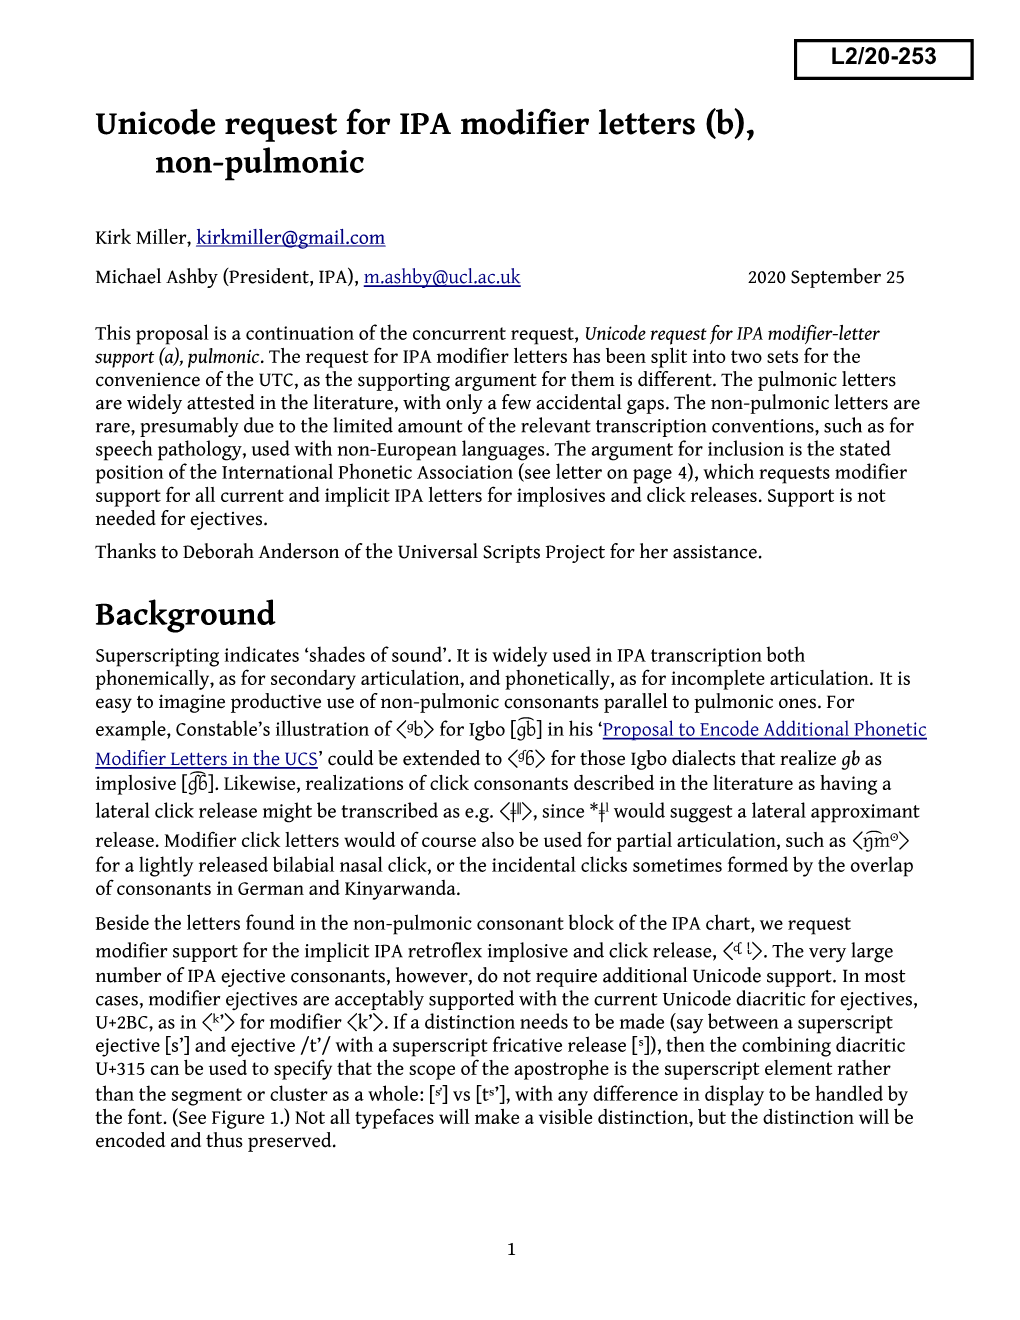 Unicode Request for IPA Modifier Letters (B), Non-Pulmonic Background